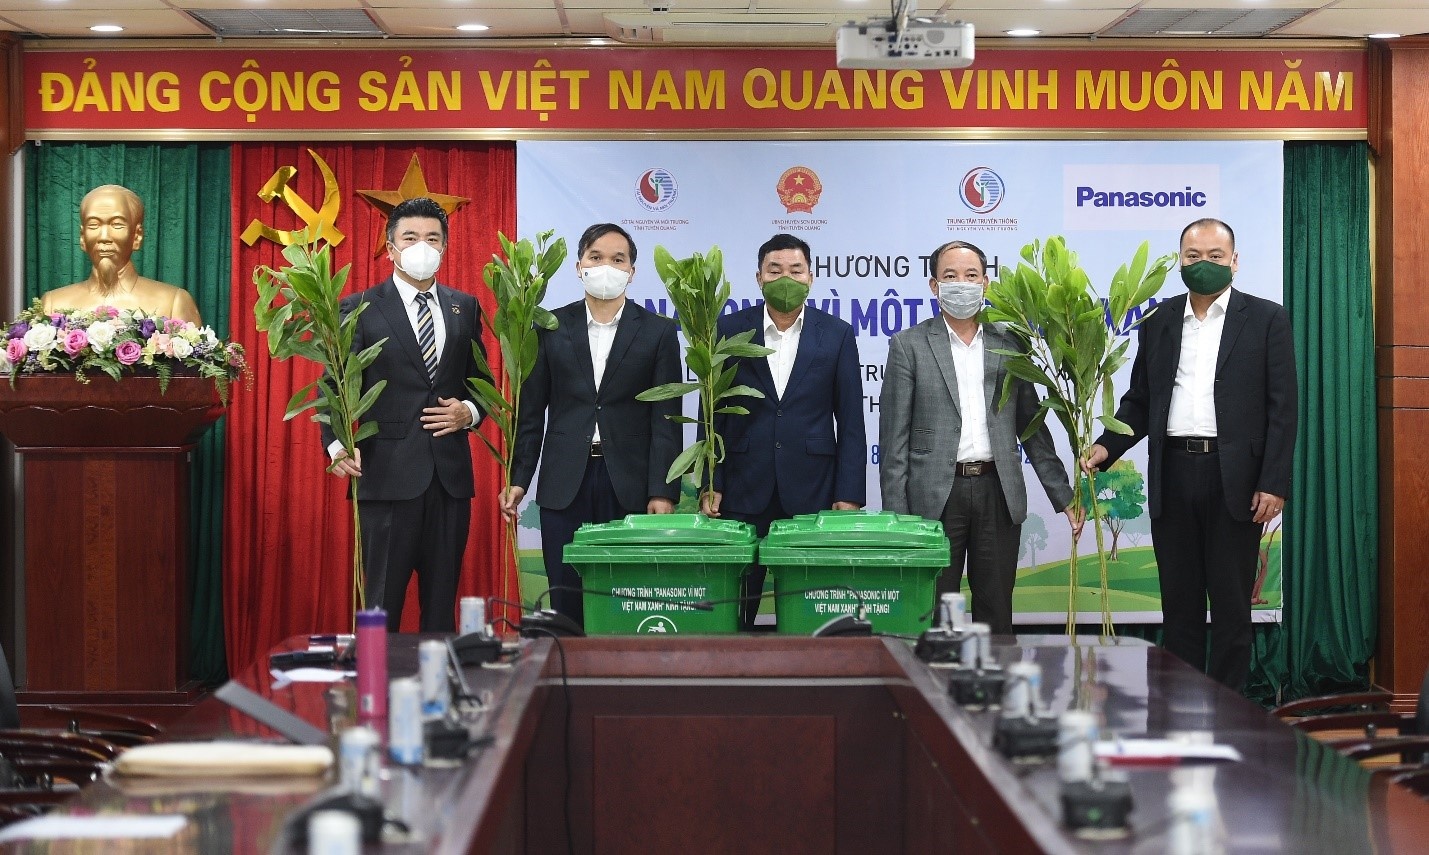 Panasonic continues journey for a green Vietnam despite Covid-19